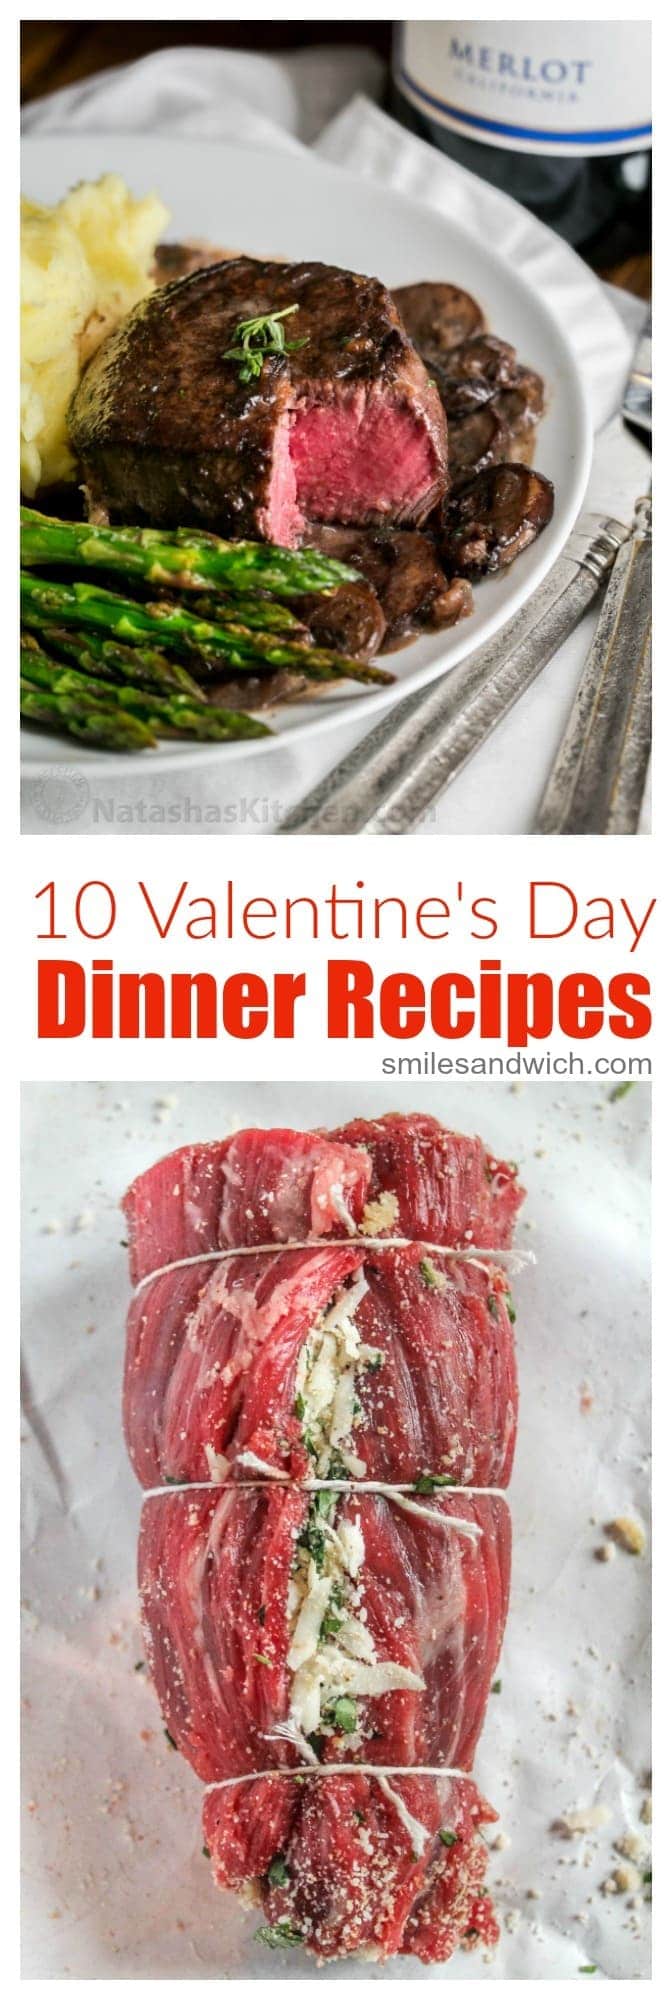 Valentine's Day Dinner Recipes - Smile Sandwich